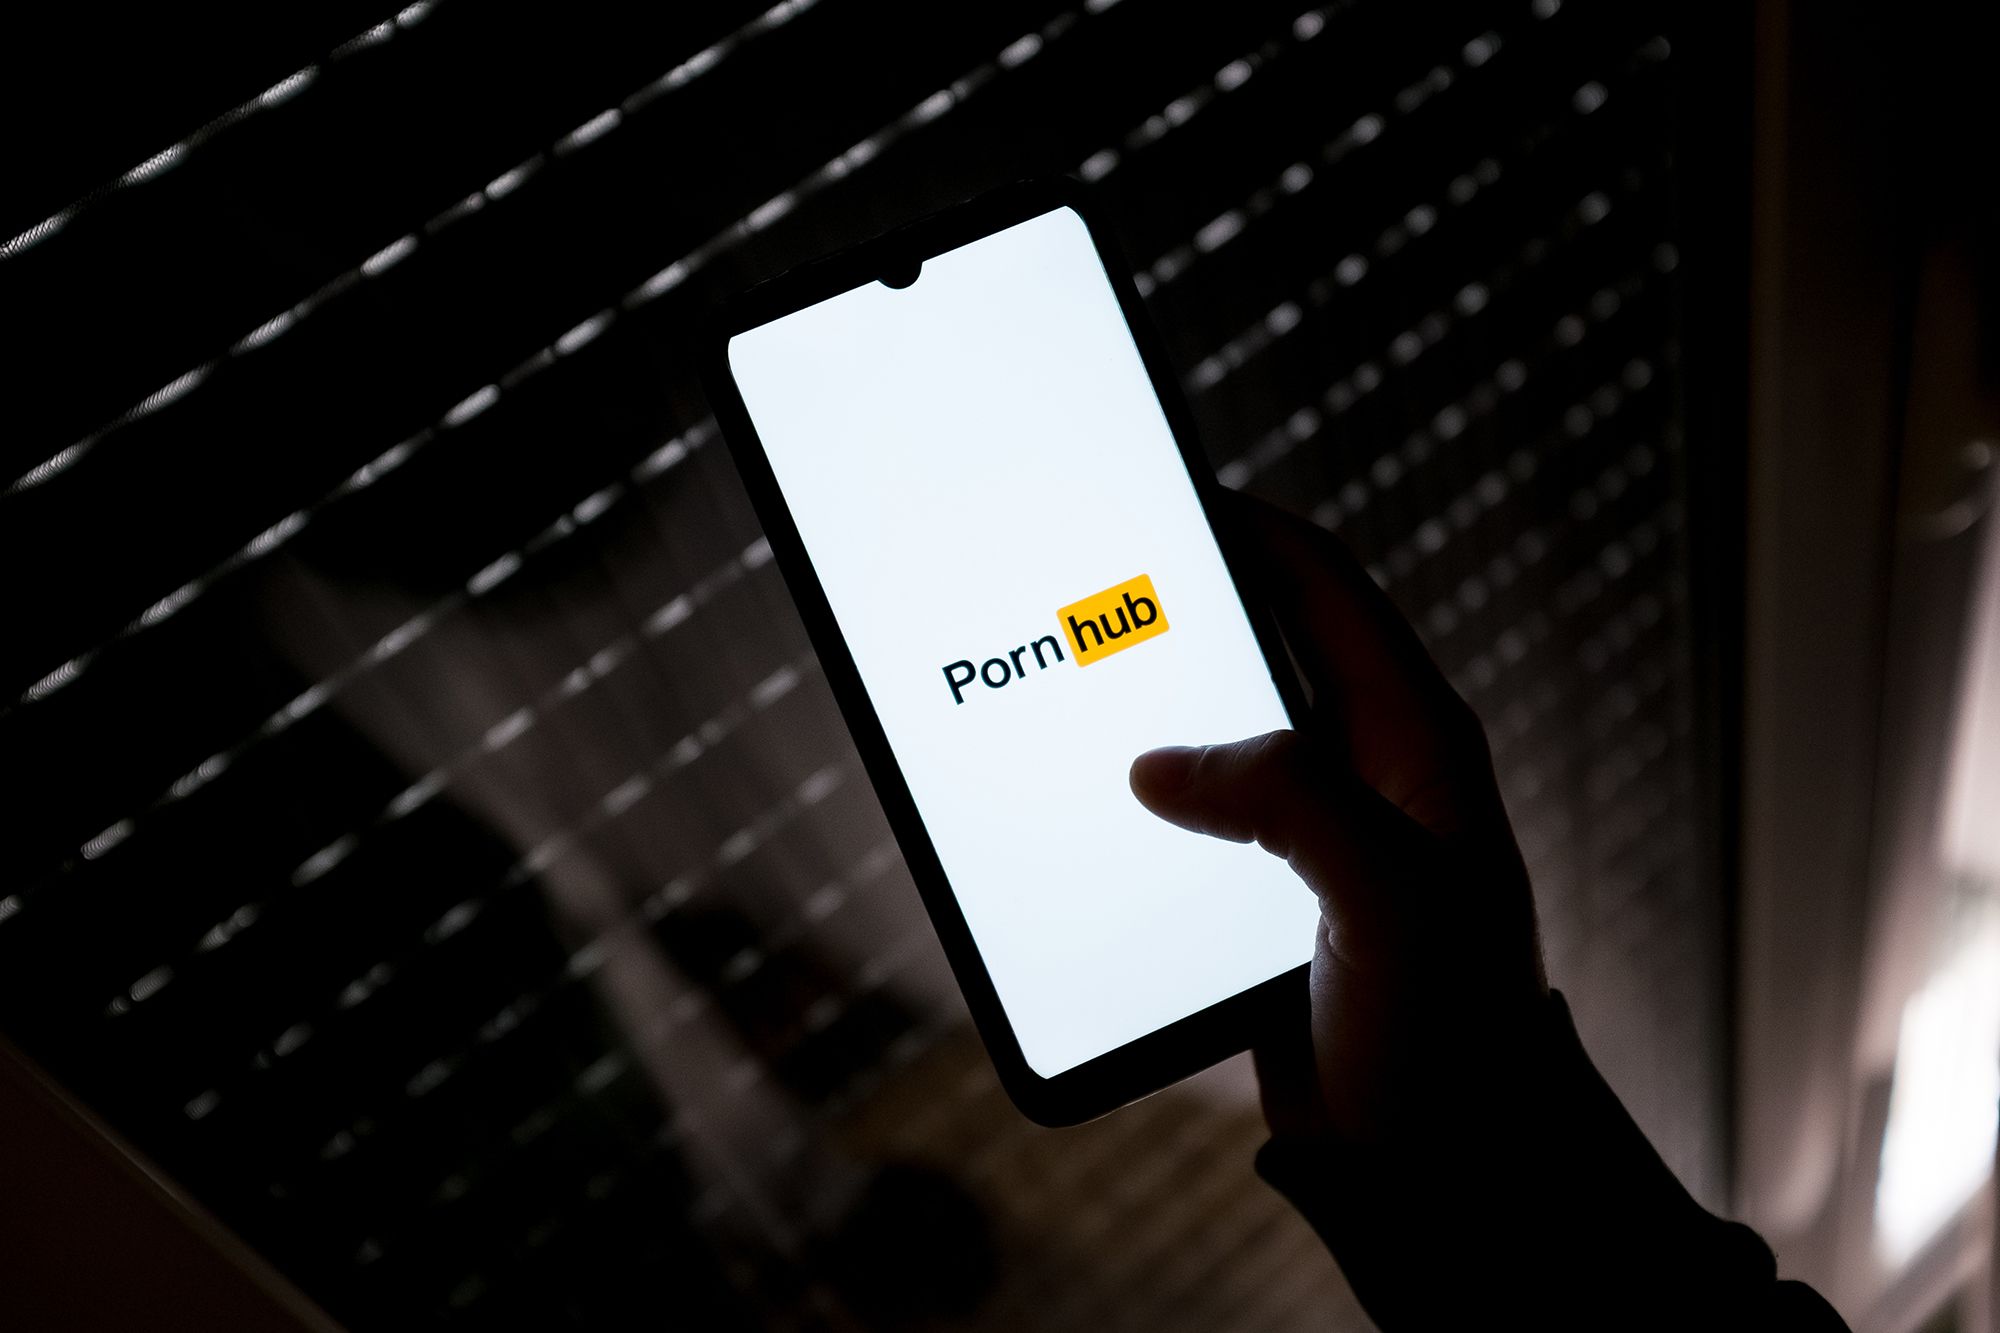 Purbhub - Pornhub asks users, Big Tech for help as states adopt age verification laws  | CNN Business